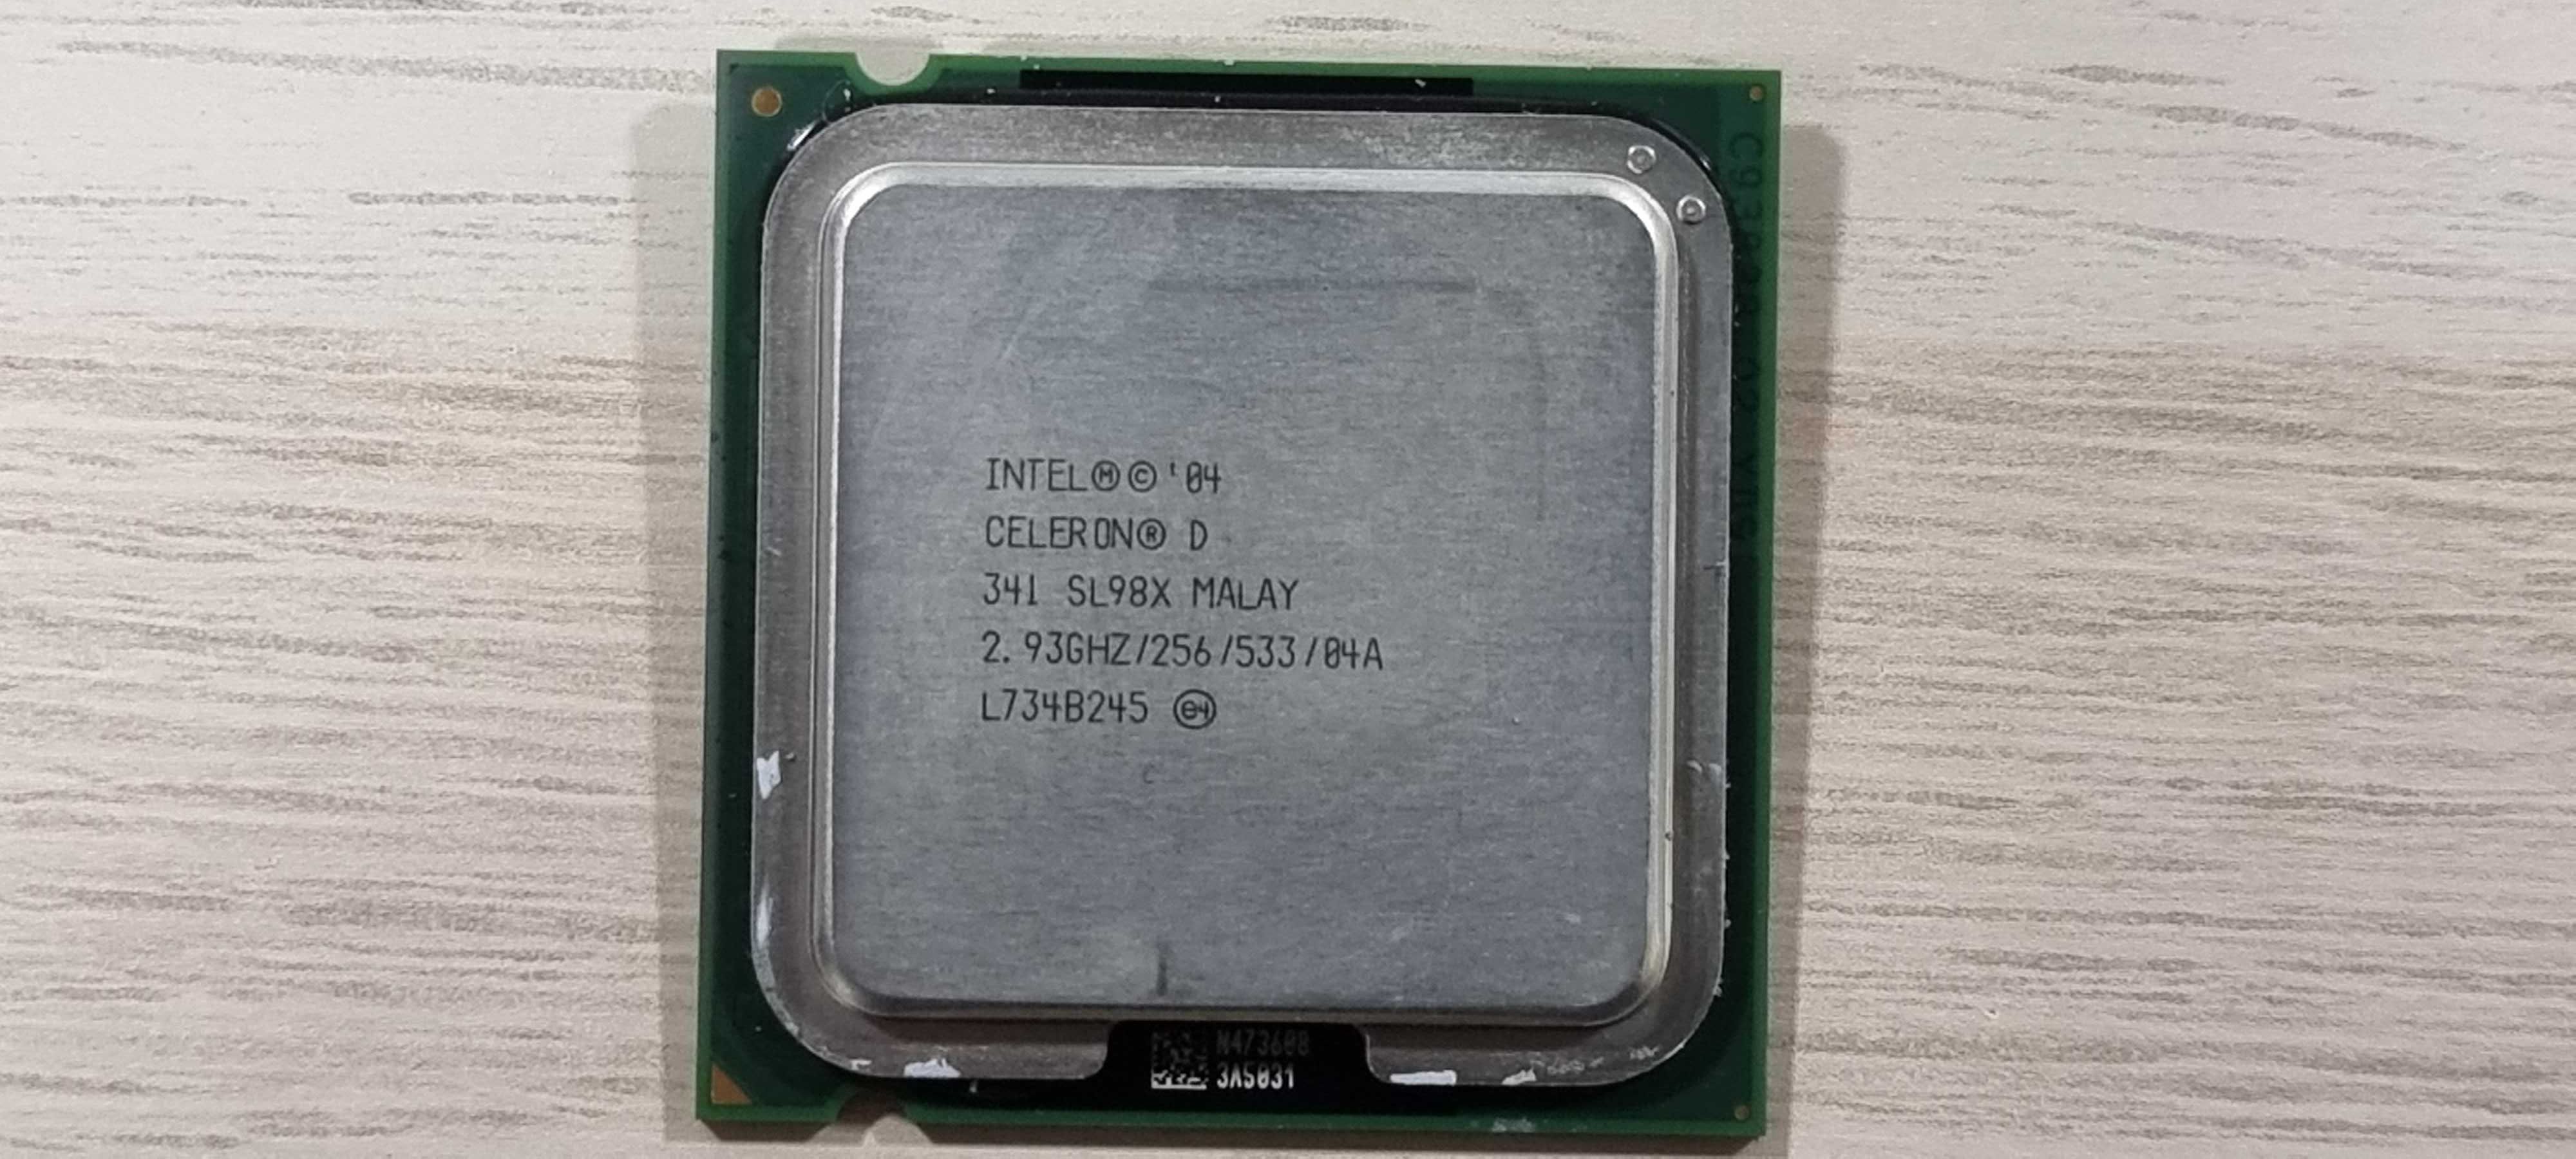 Procesor Intel Celeron D 2,93 GHz